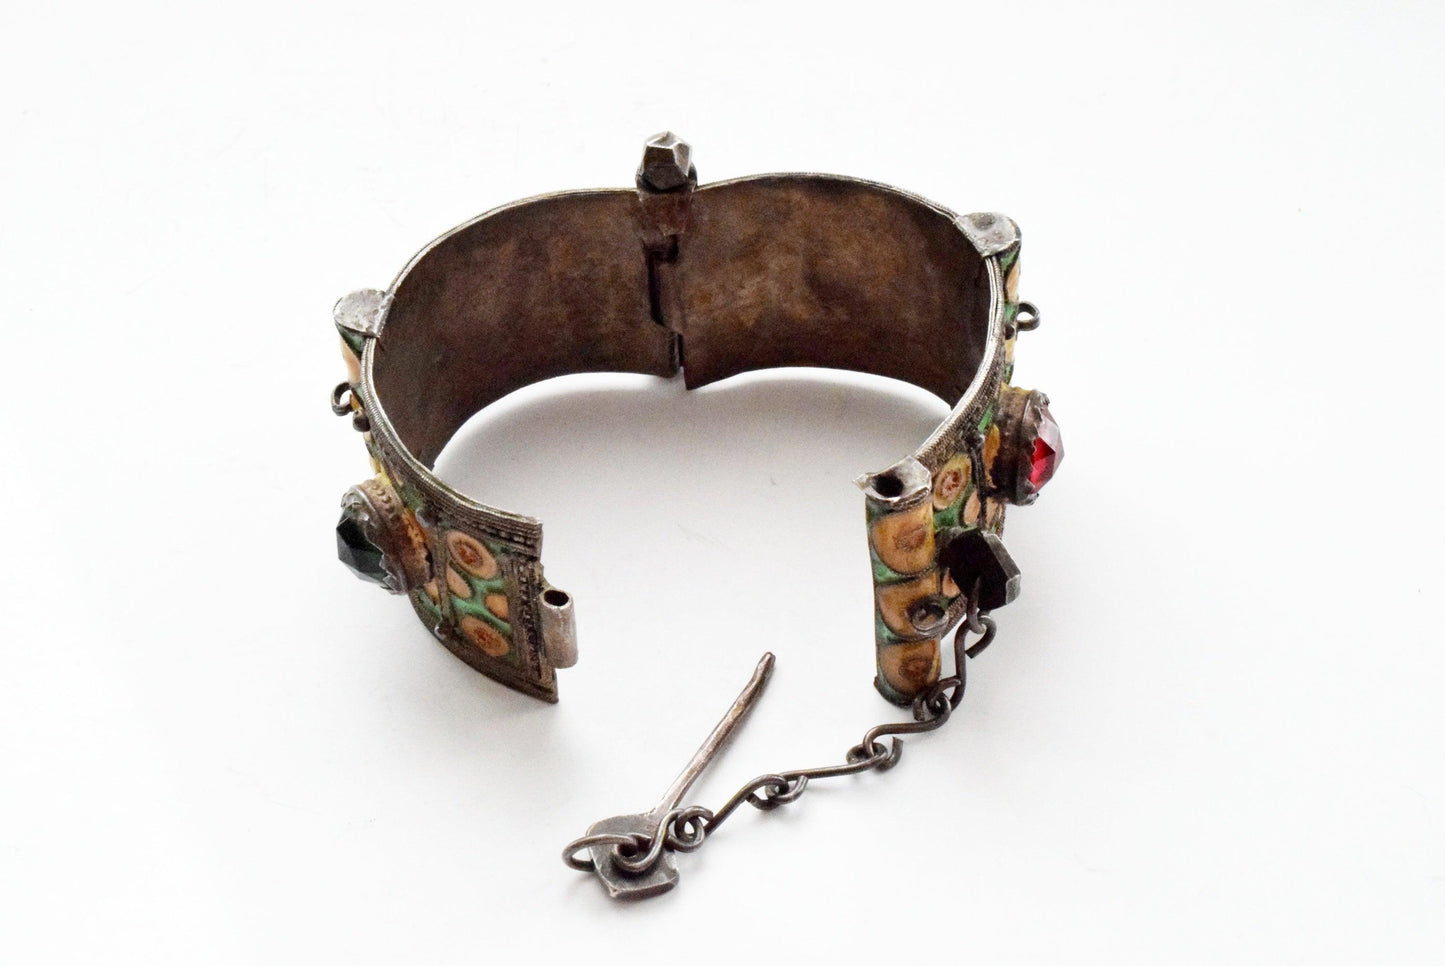 Vintage Berber Enamel Bracelet from Ida Ou Semlal, Morocco - Anteeka